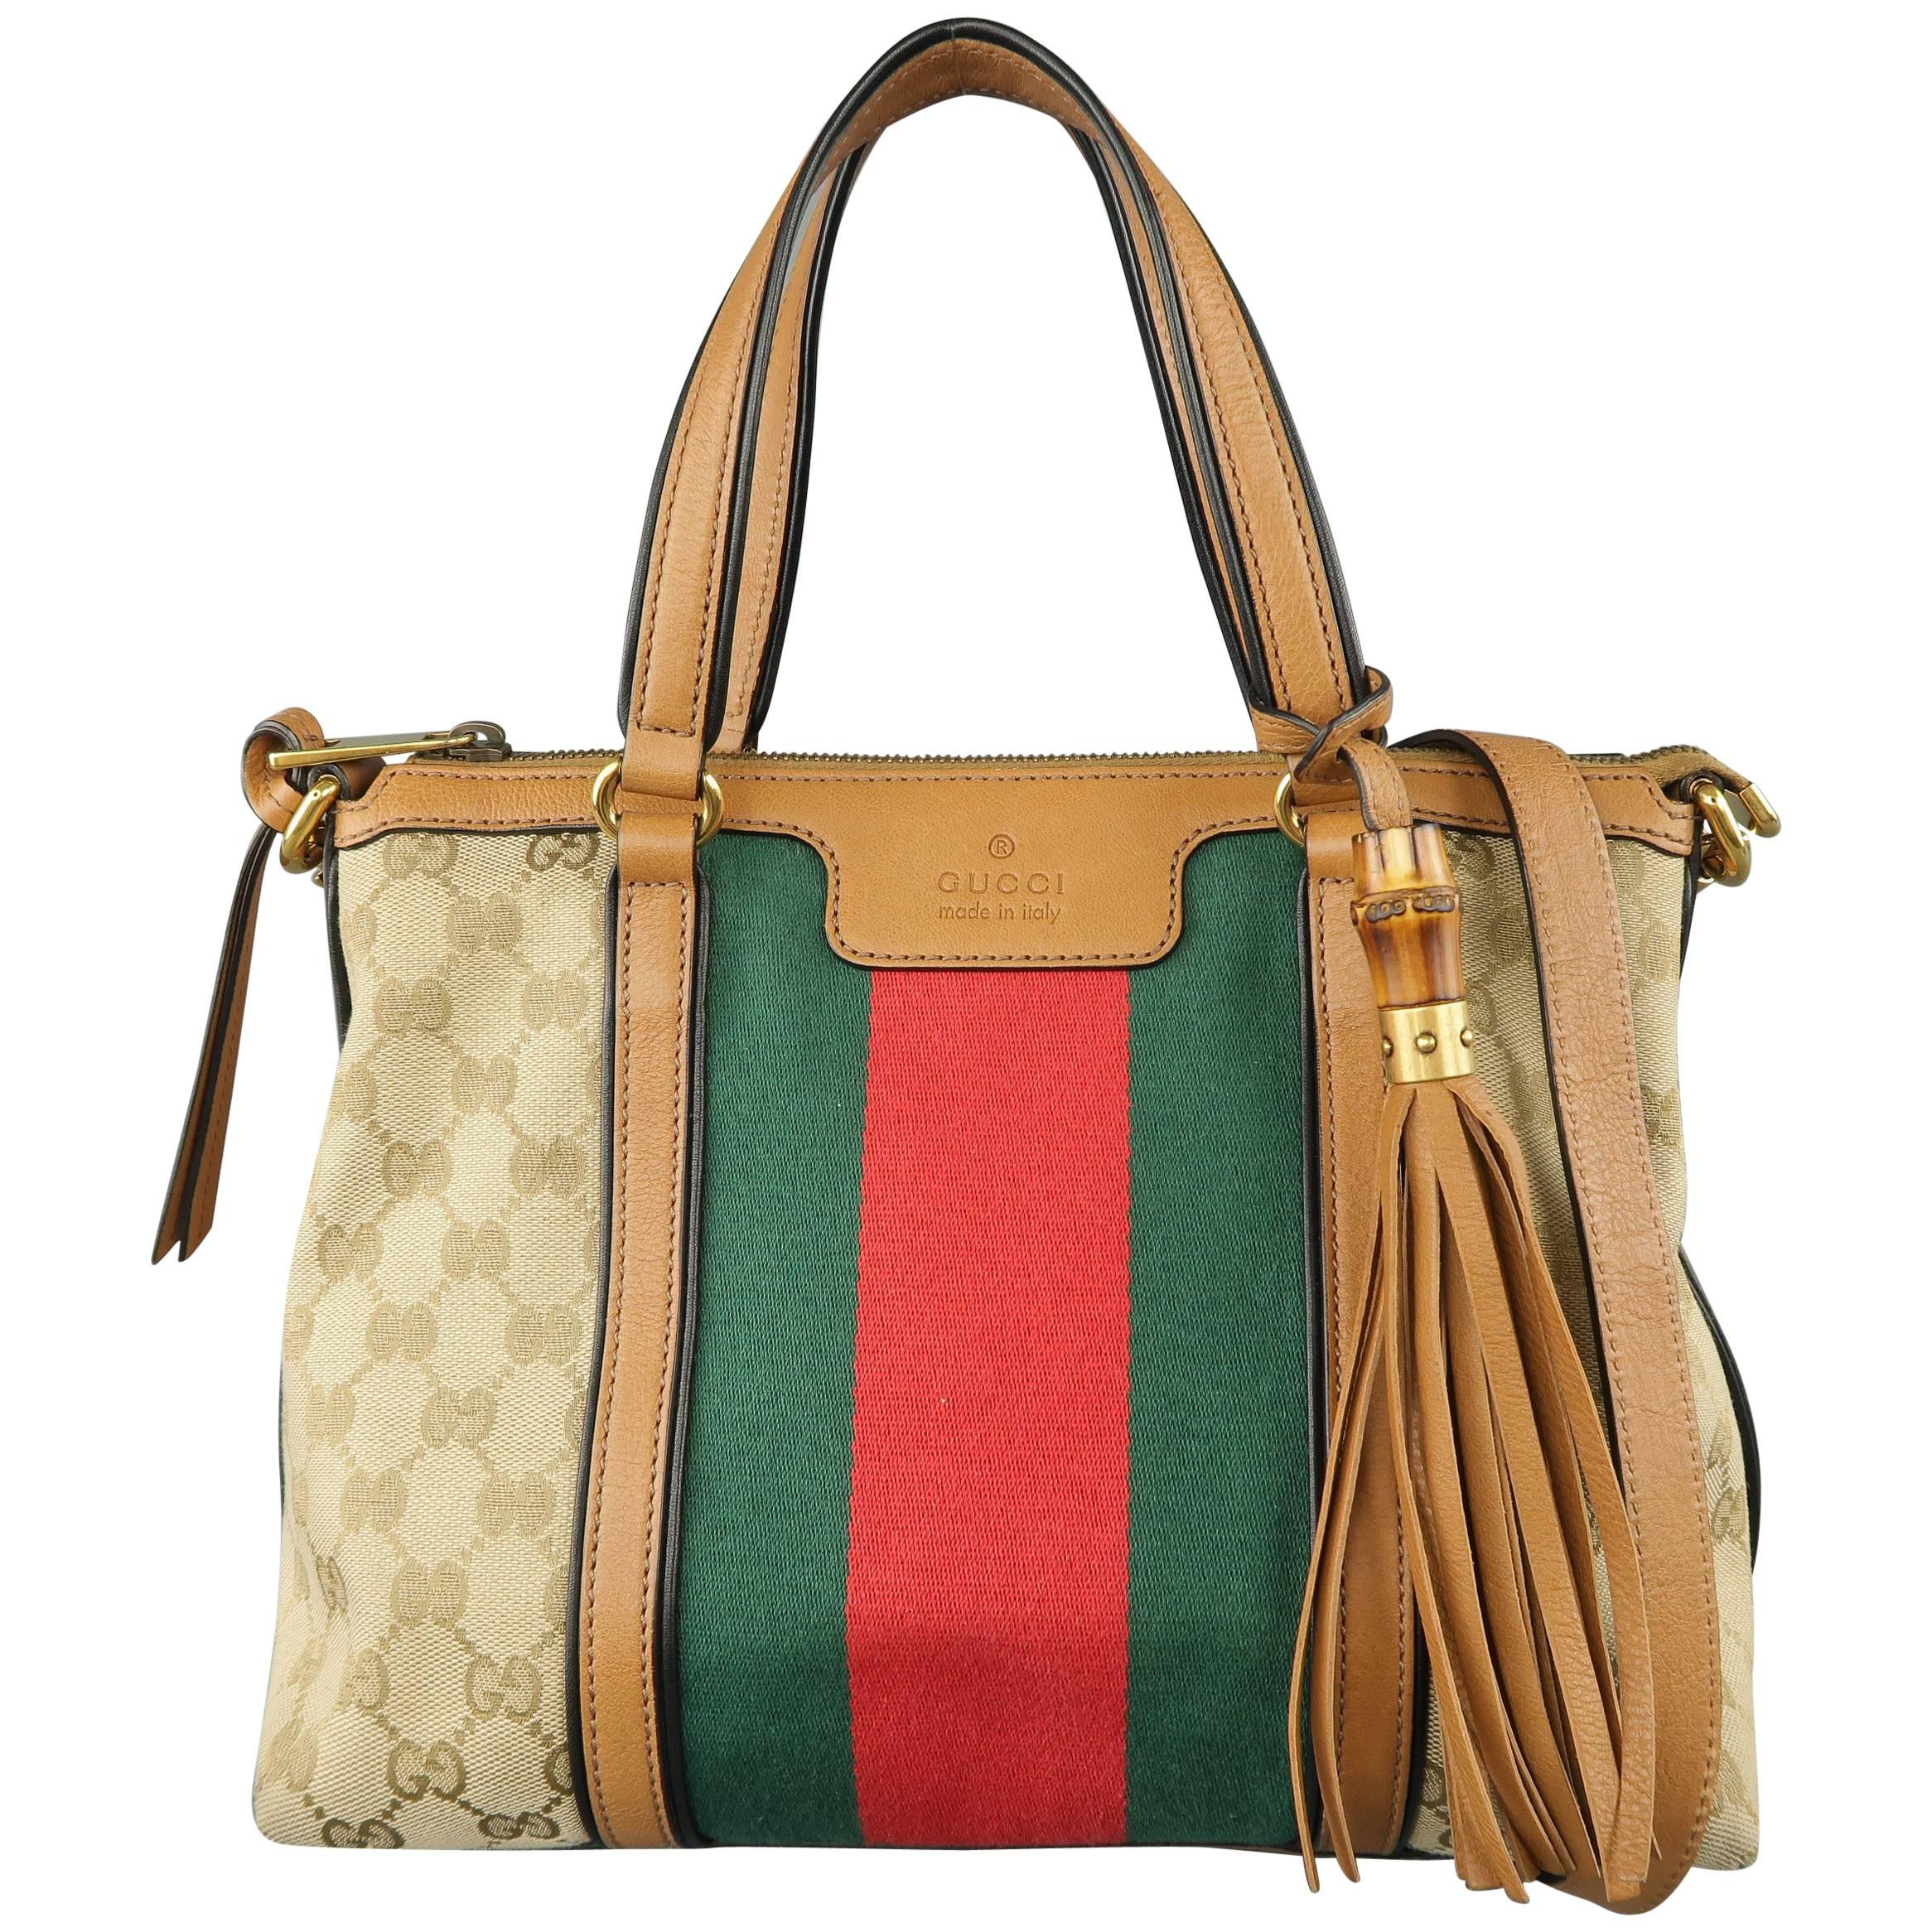 Gucci Monogram Canvas Tan Leather Green and Red Stripe Tassel Handbag